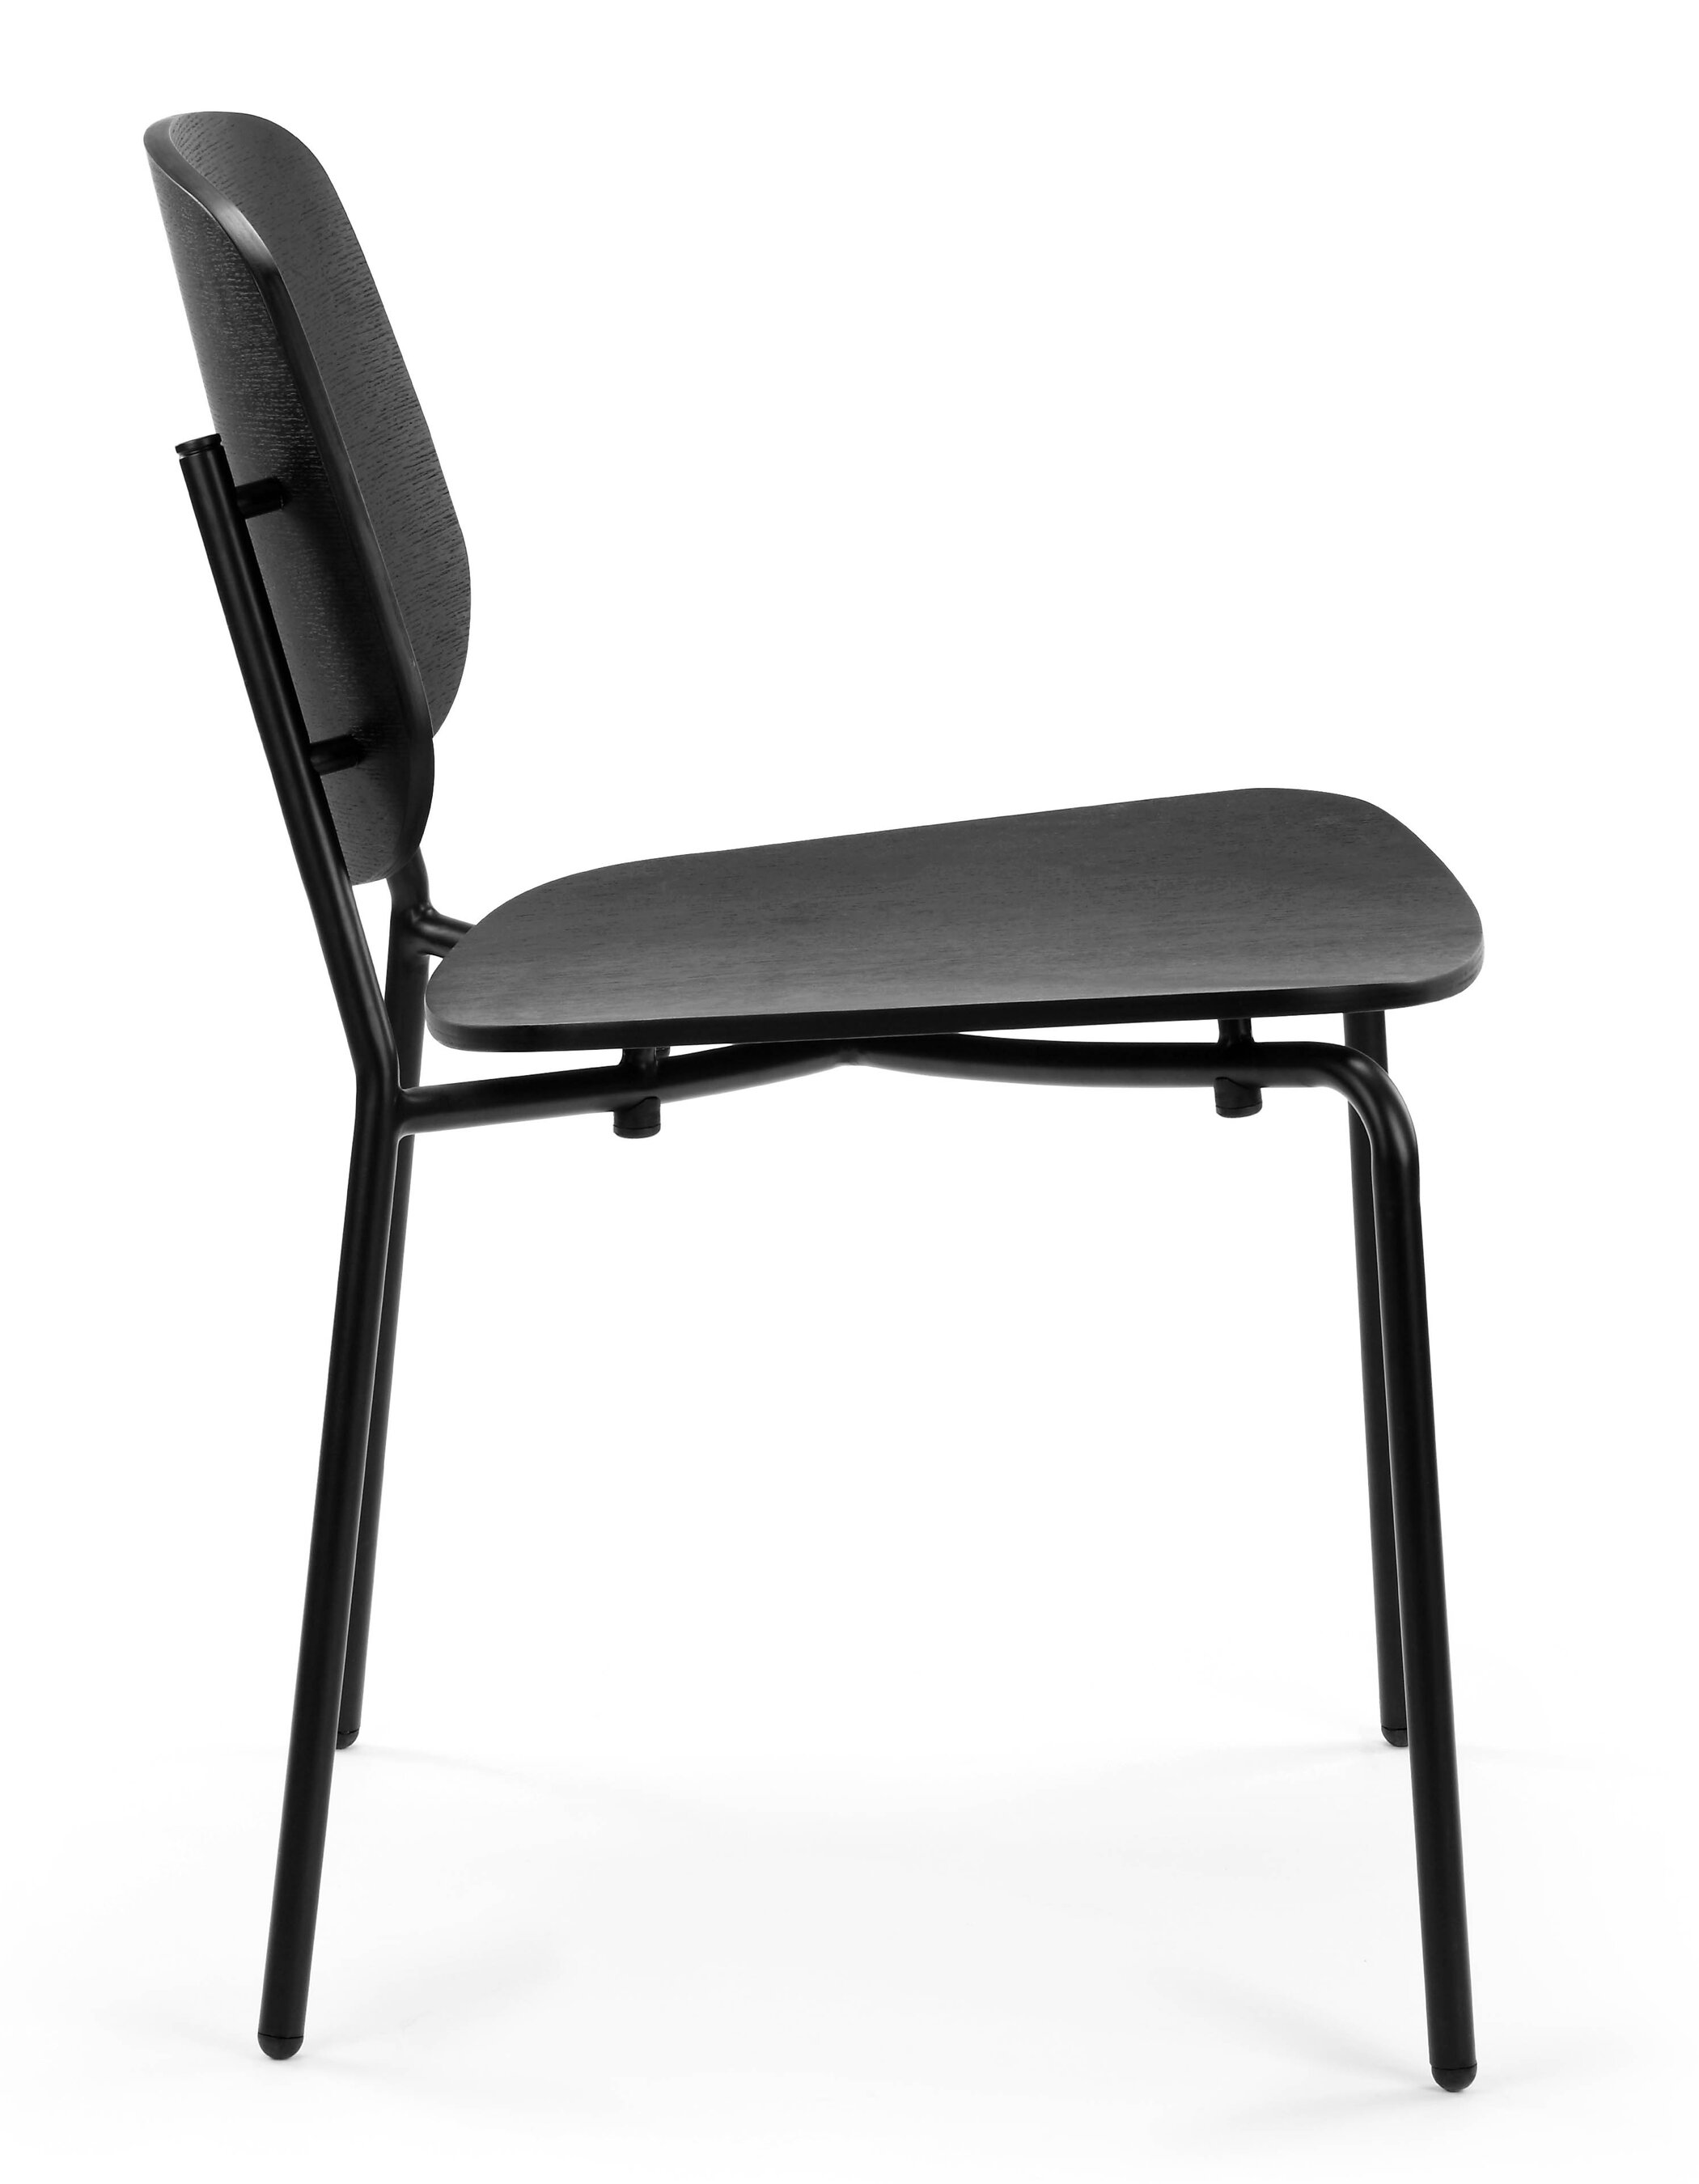 WS - Platform chair - Black ash (Side)